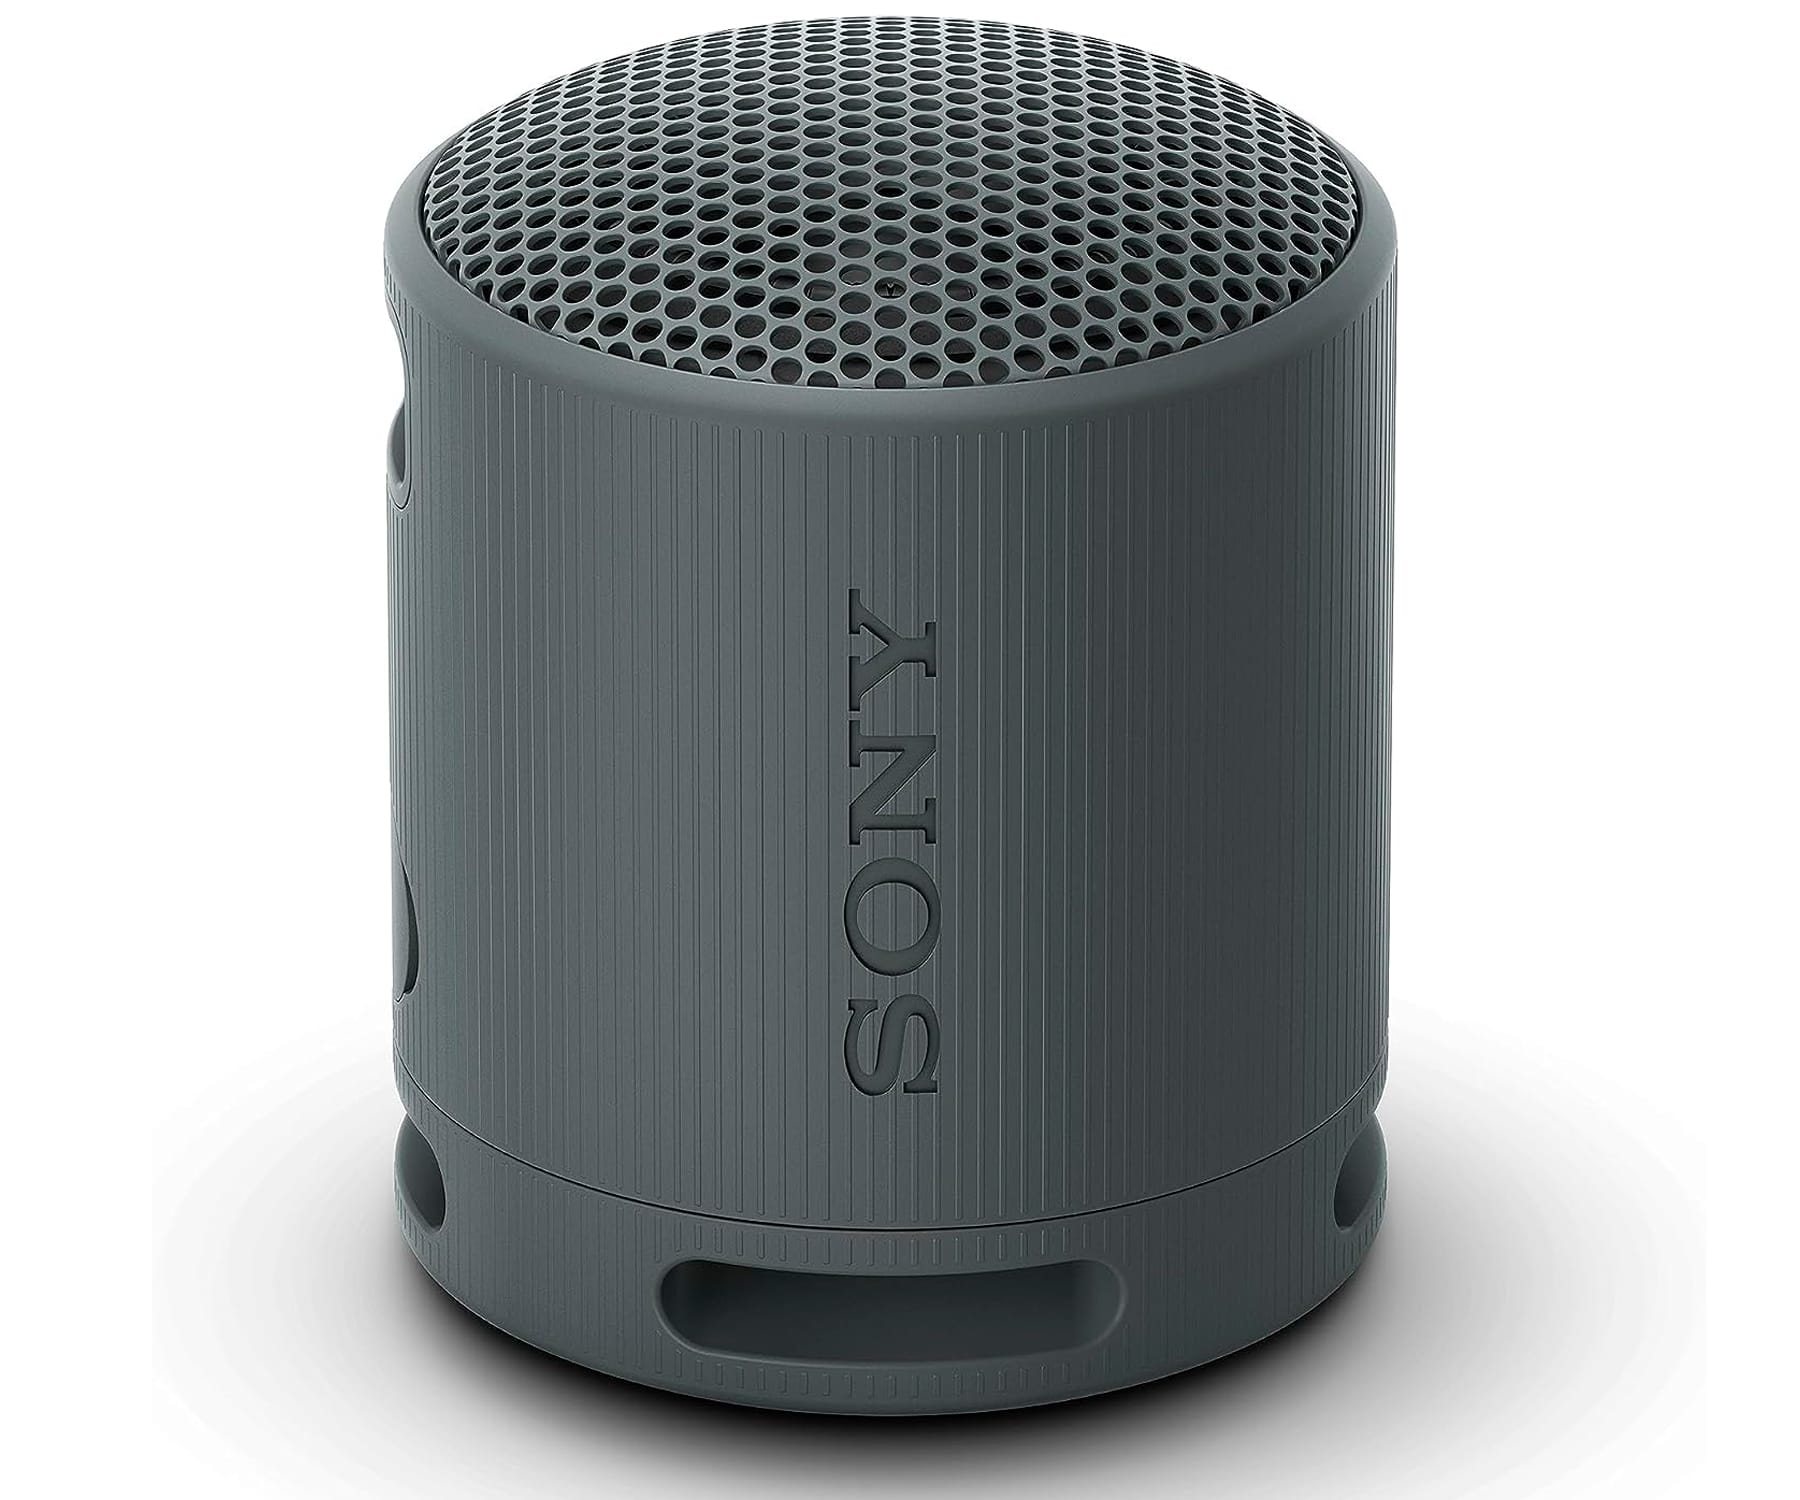 Altavoz Portátil con Bluetooth Sony V13 - Negro